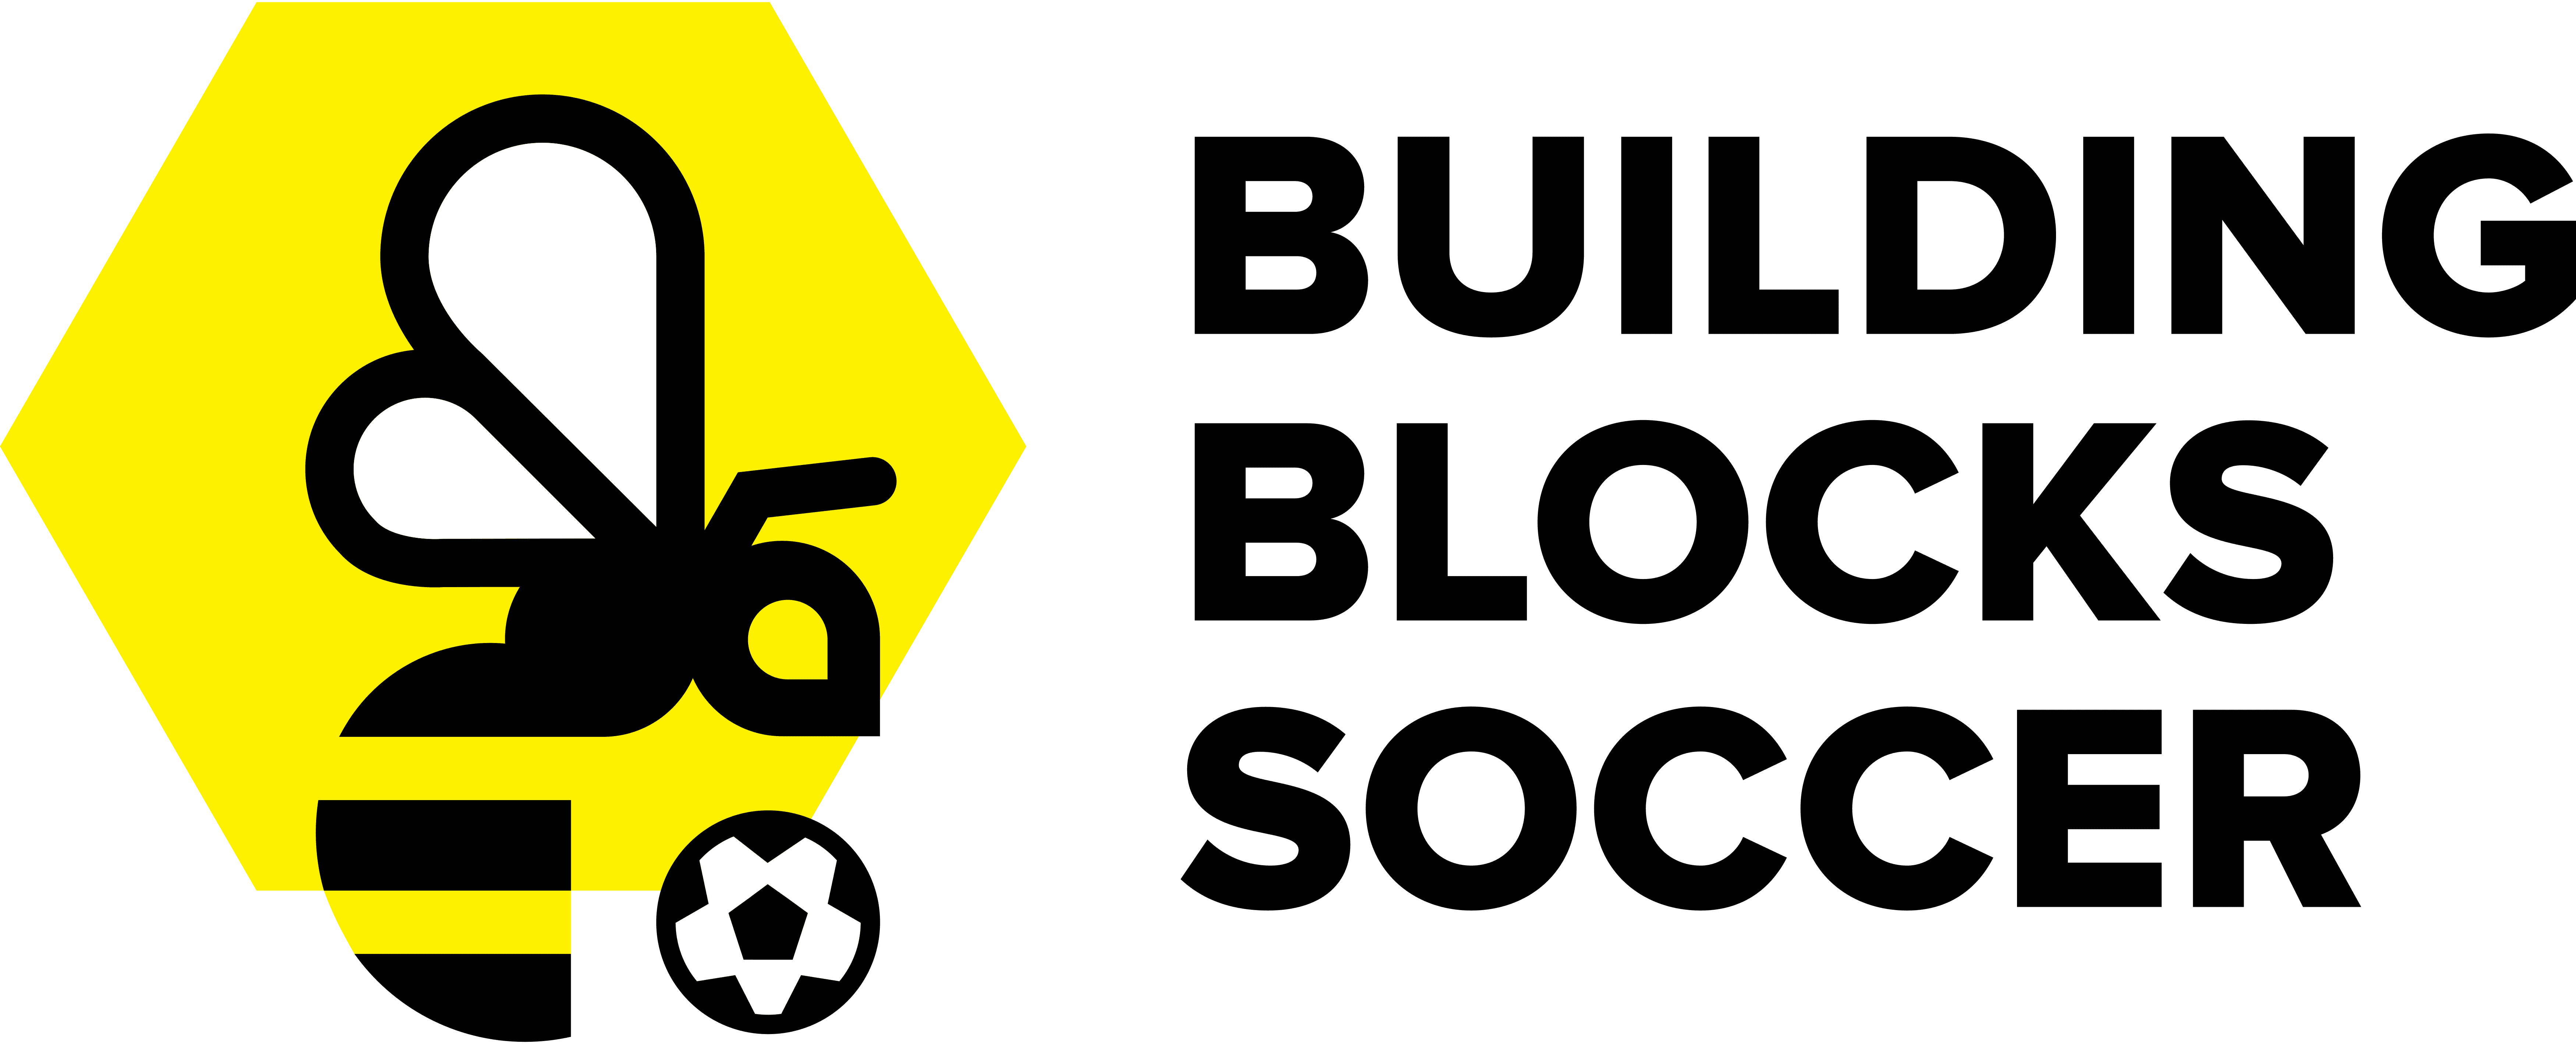 Building Blocks Soccer